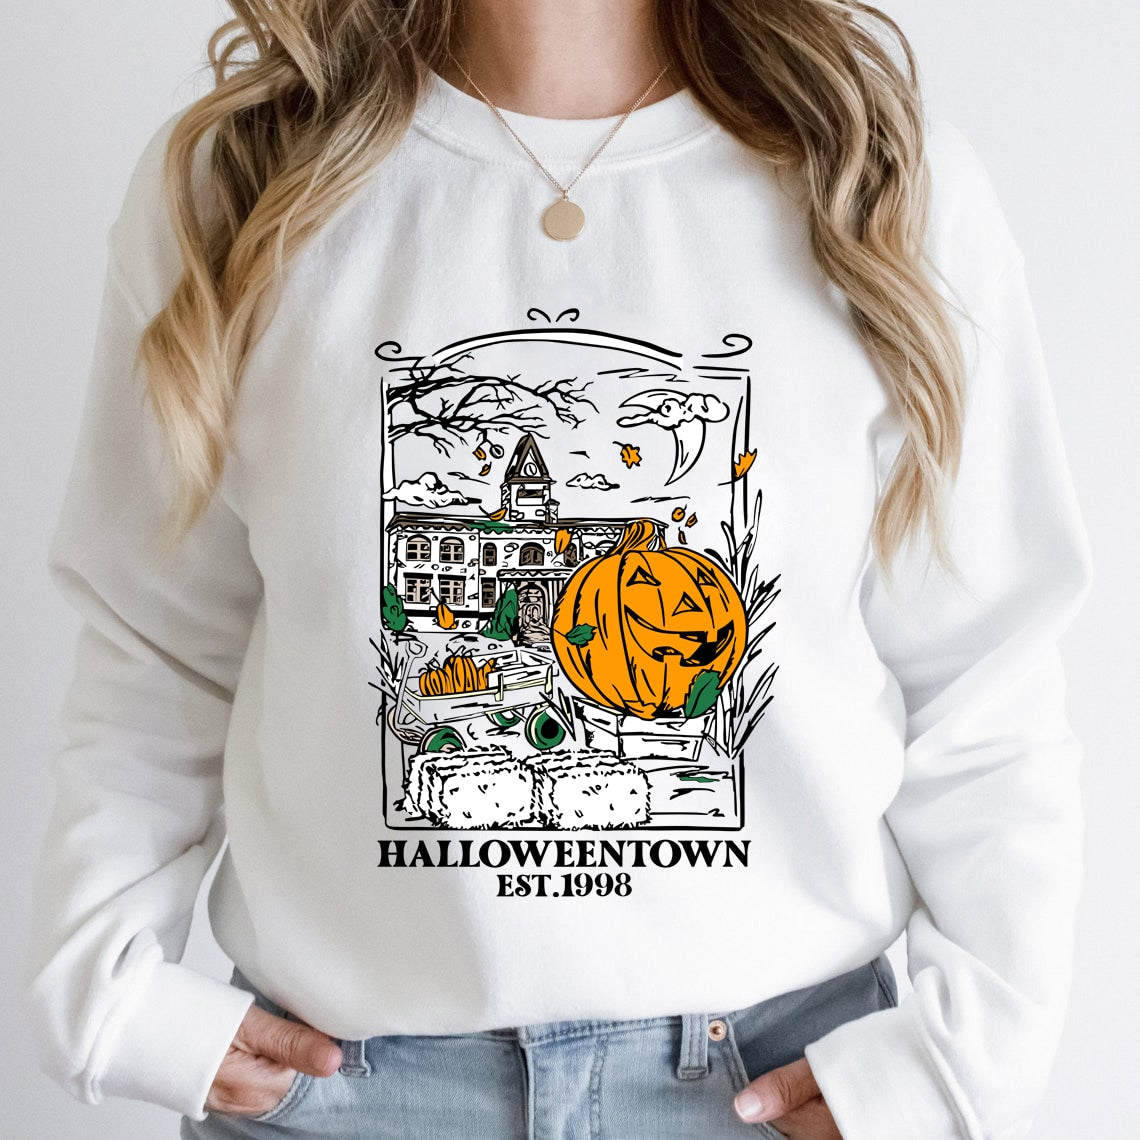 Prettyswomen Halloween Costume Colored Halloweentown Est 1998 Sweatshirt Vintage Women Long Sleeve Jumper Pumpkin Halloween Pullovers